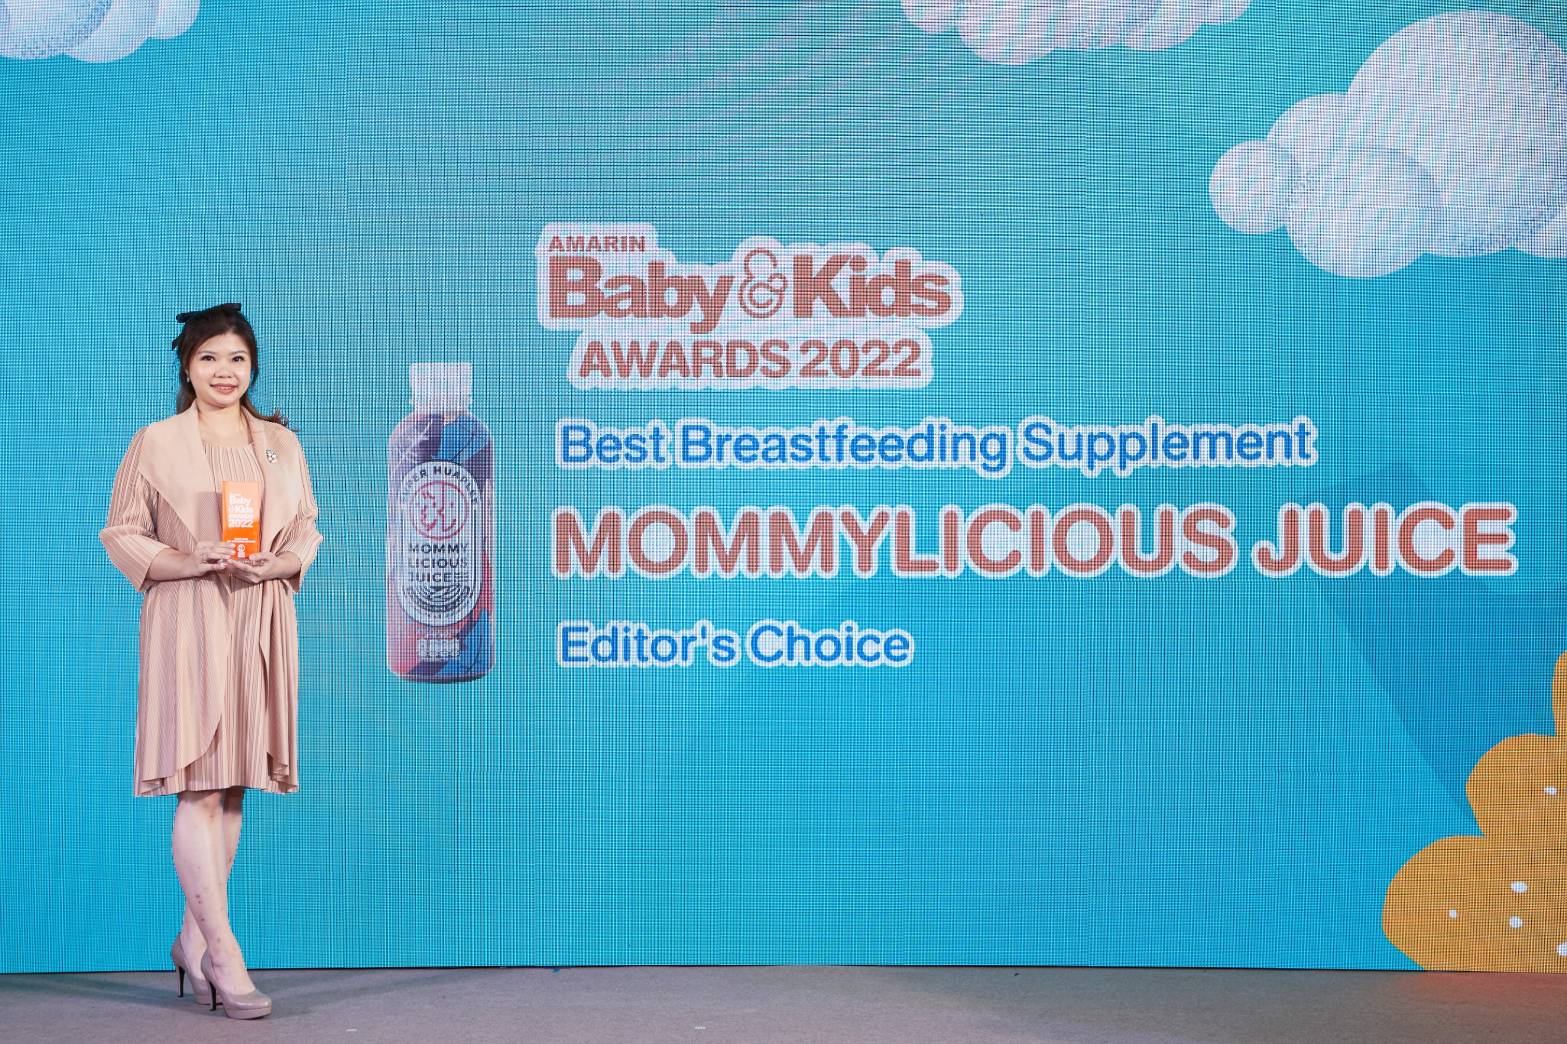 Mommylicious Juice ชนะรางวัล BEST BREASTFEEDING SUPPLEMENT จาก Amarin Baby & Kids Awards 2022